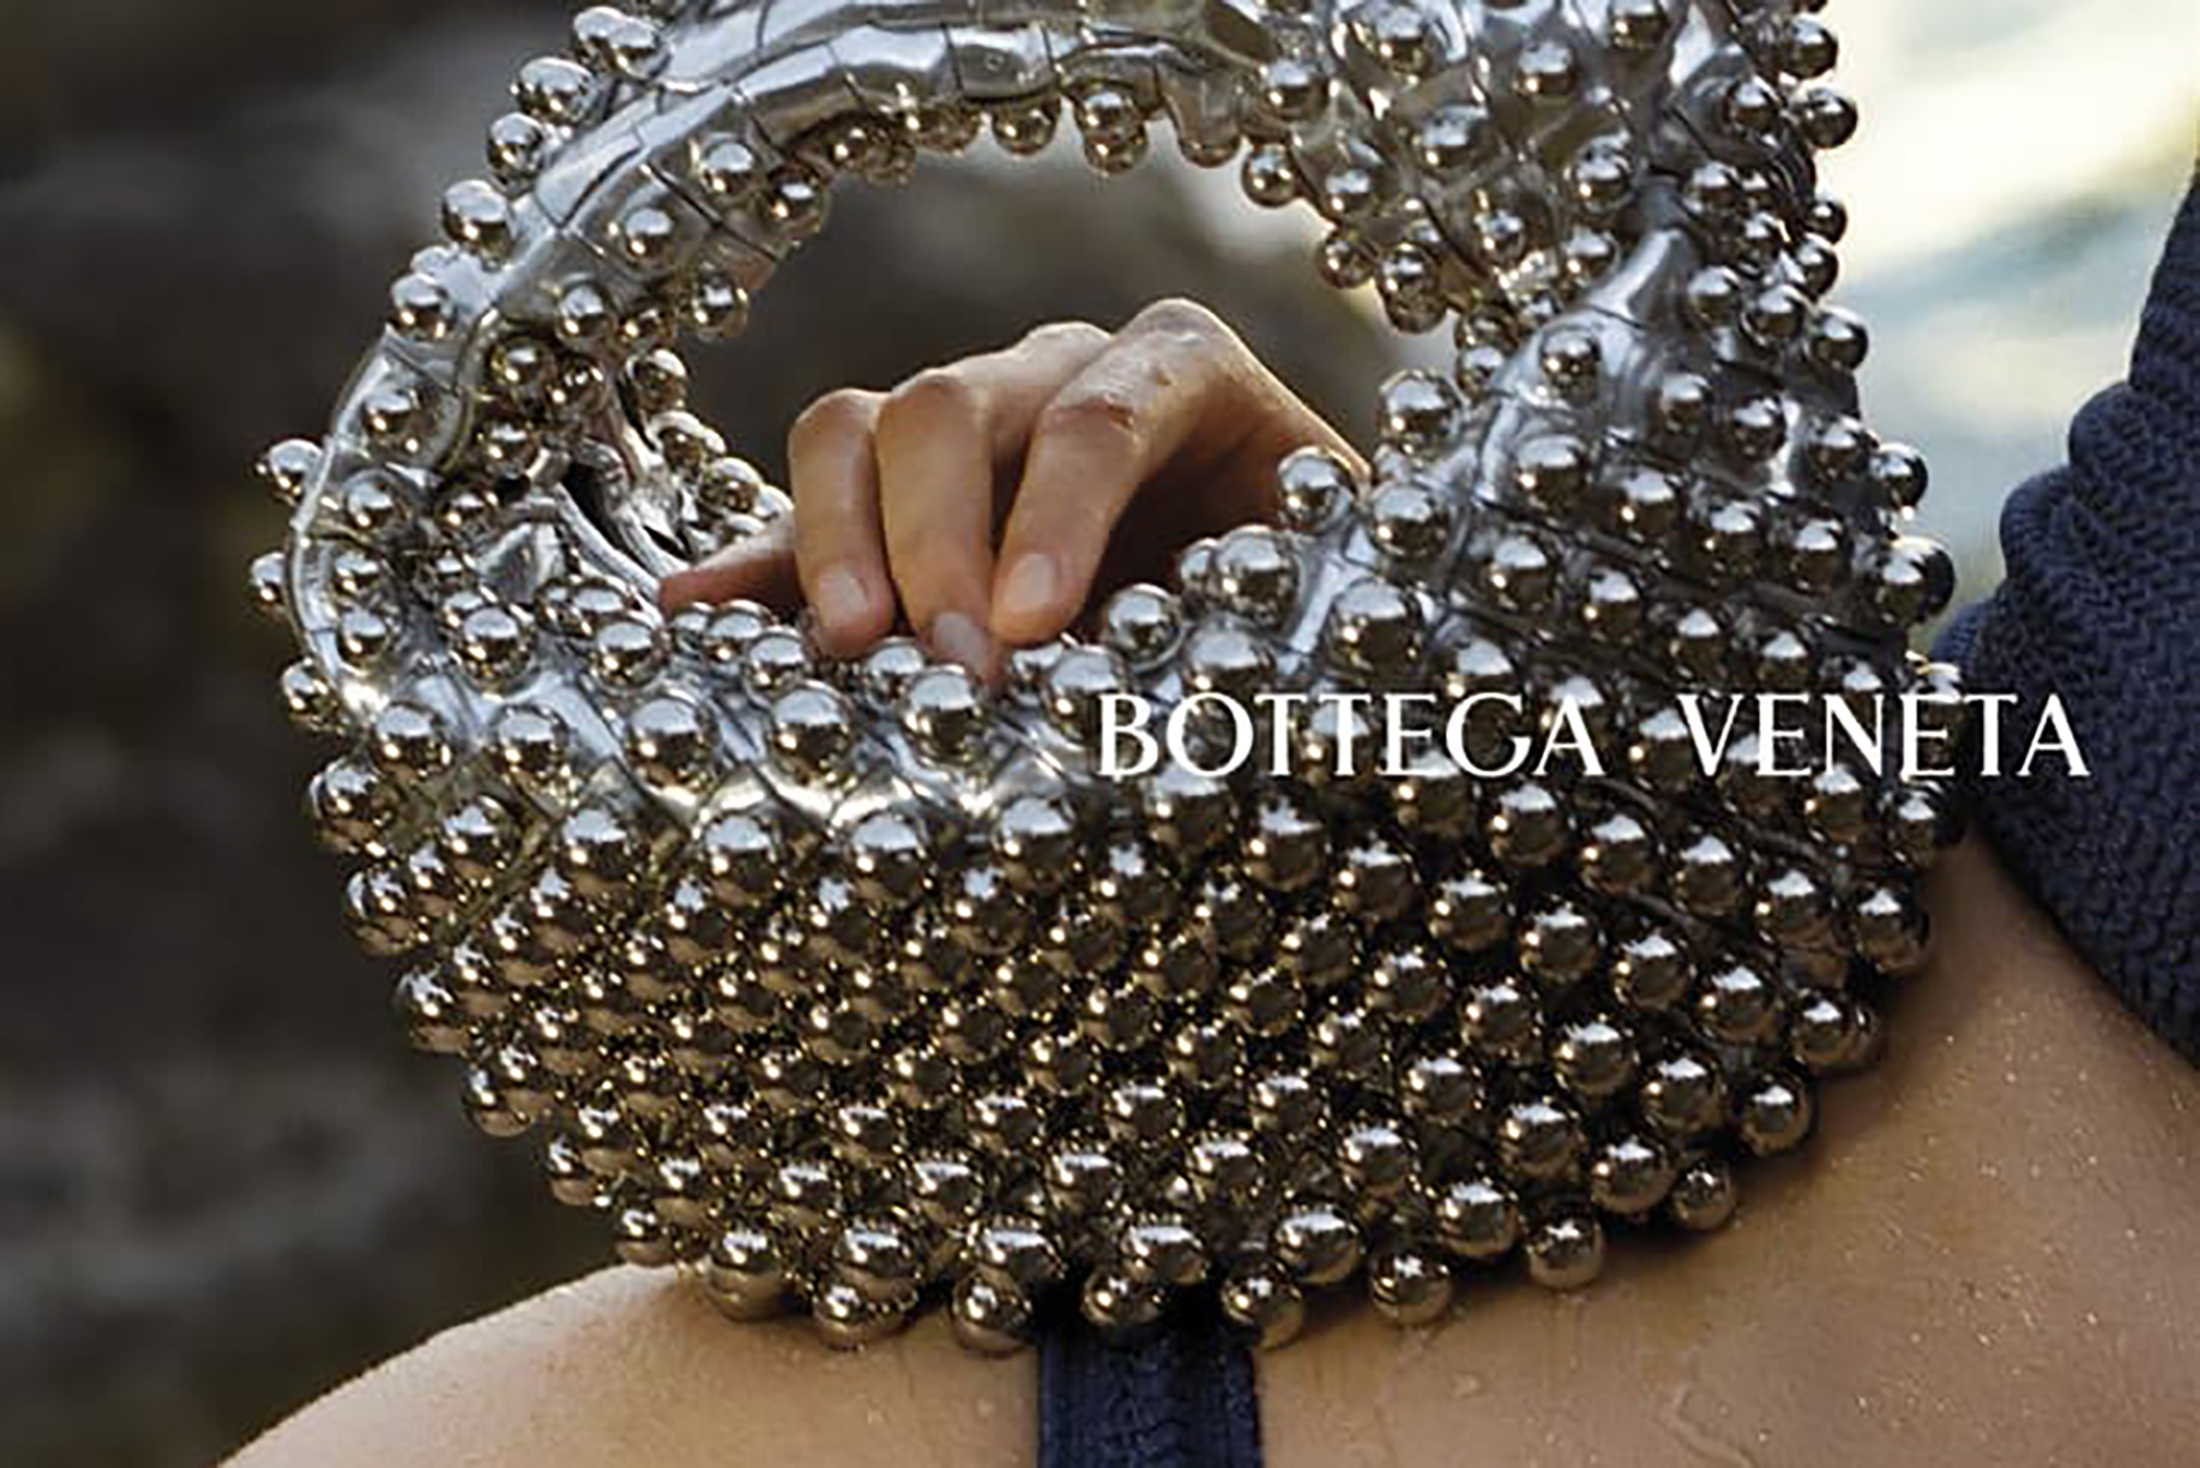 Bottega Veneta offers upscale simplicity for spring/summer 2022